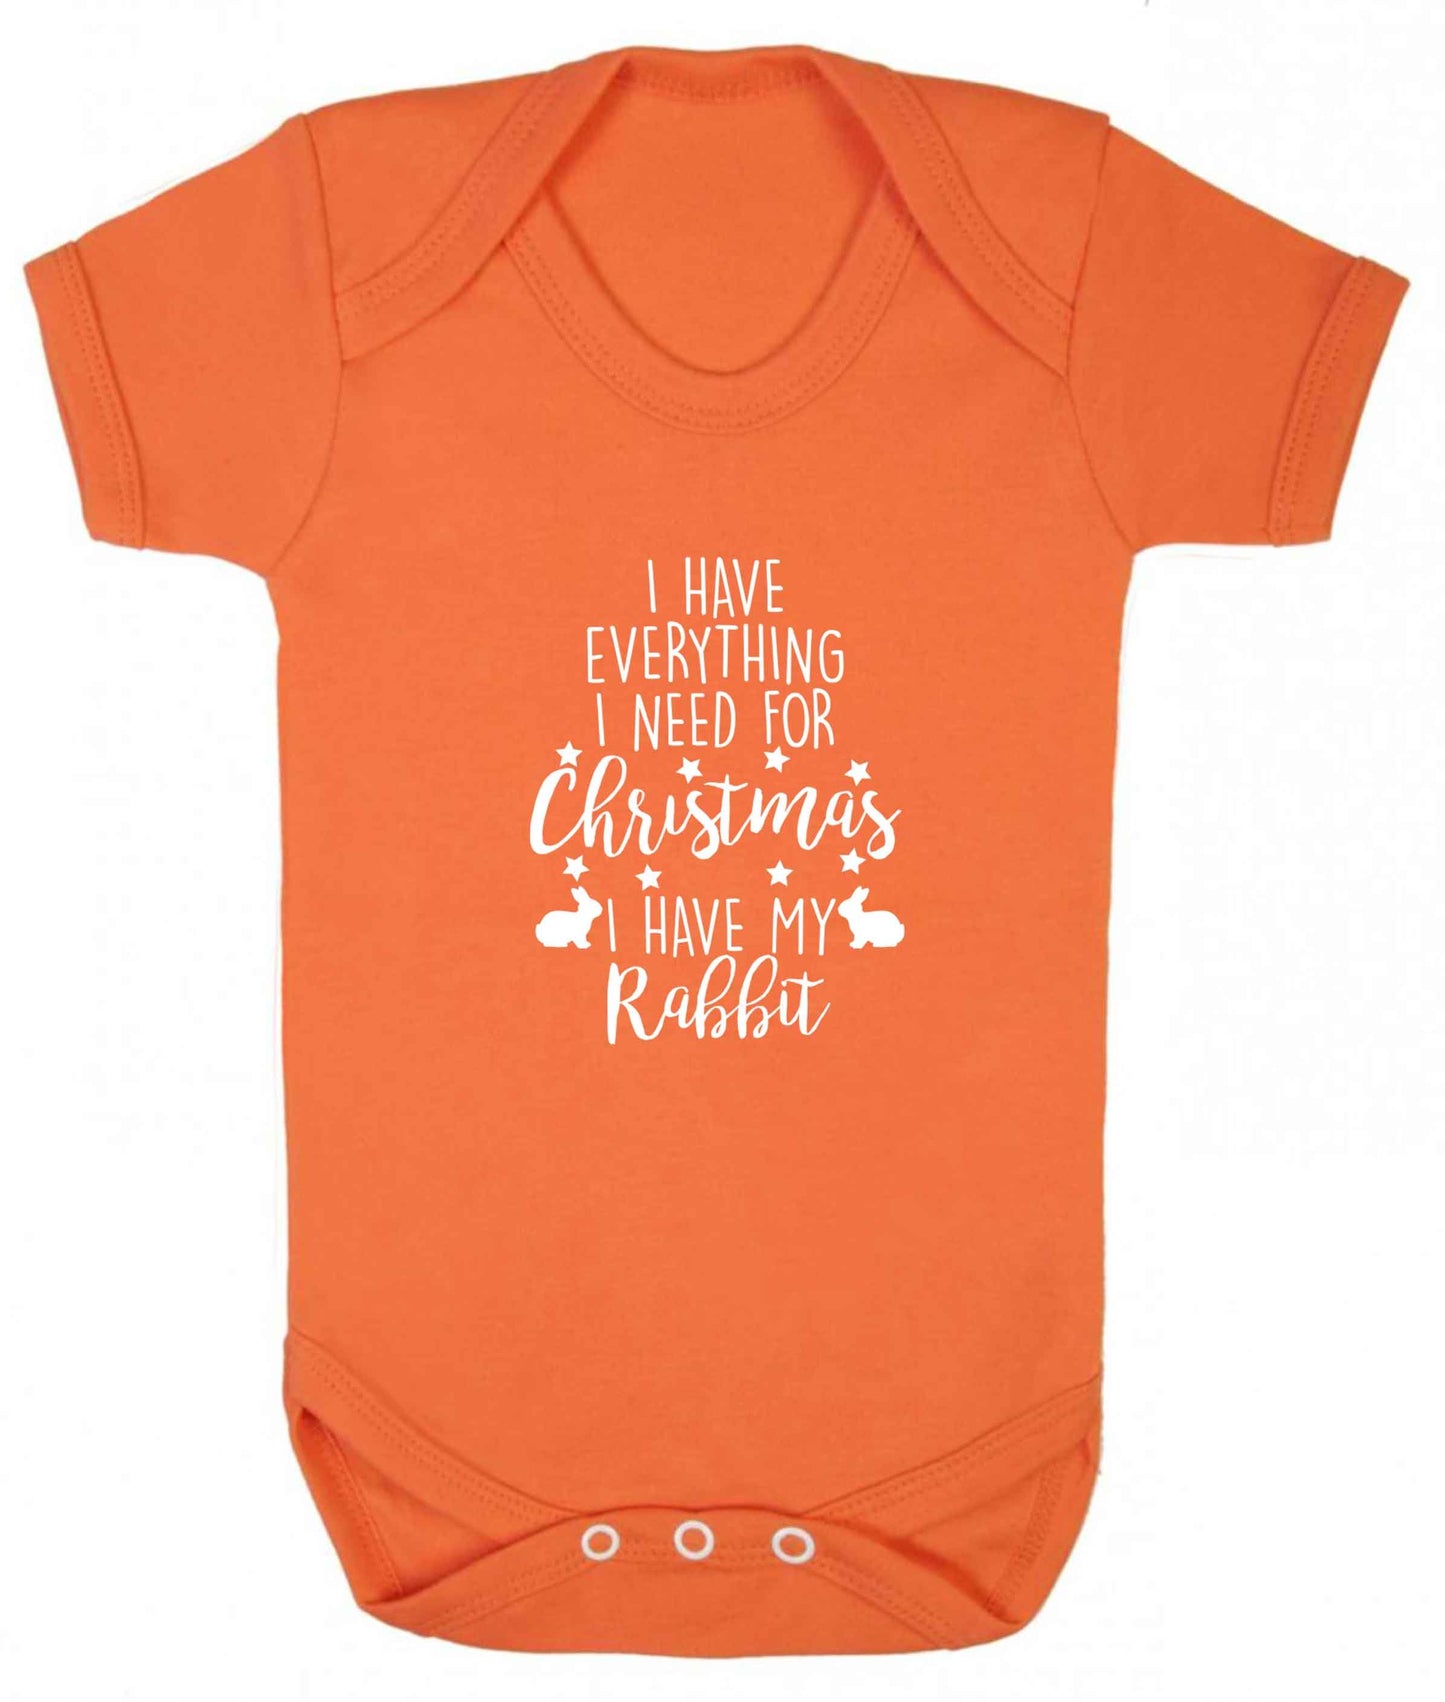 I have everything I need for Christmas I have my rabbit baby vest orange 18-24 months